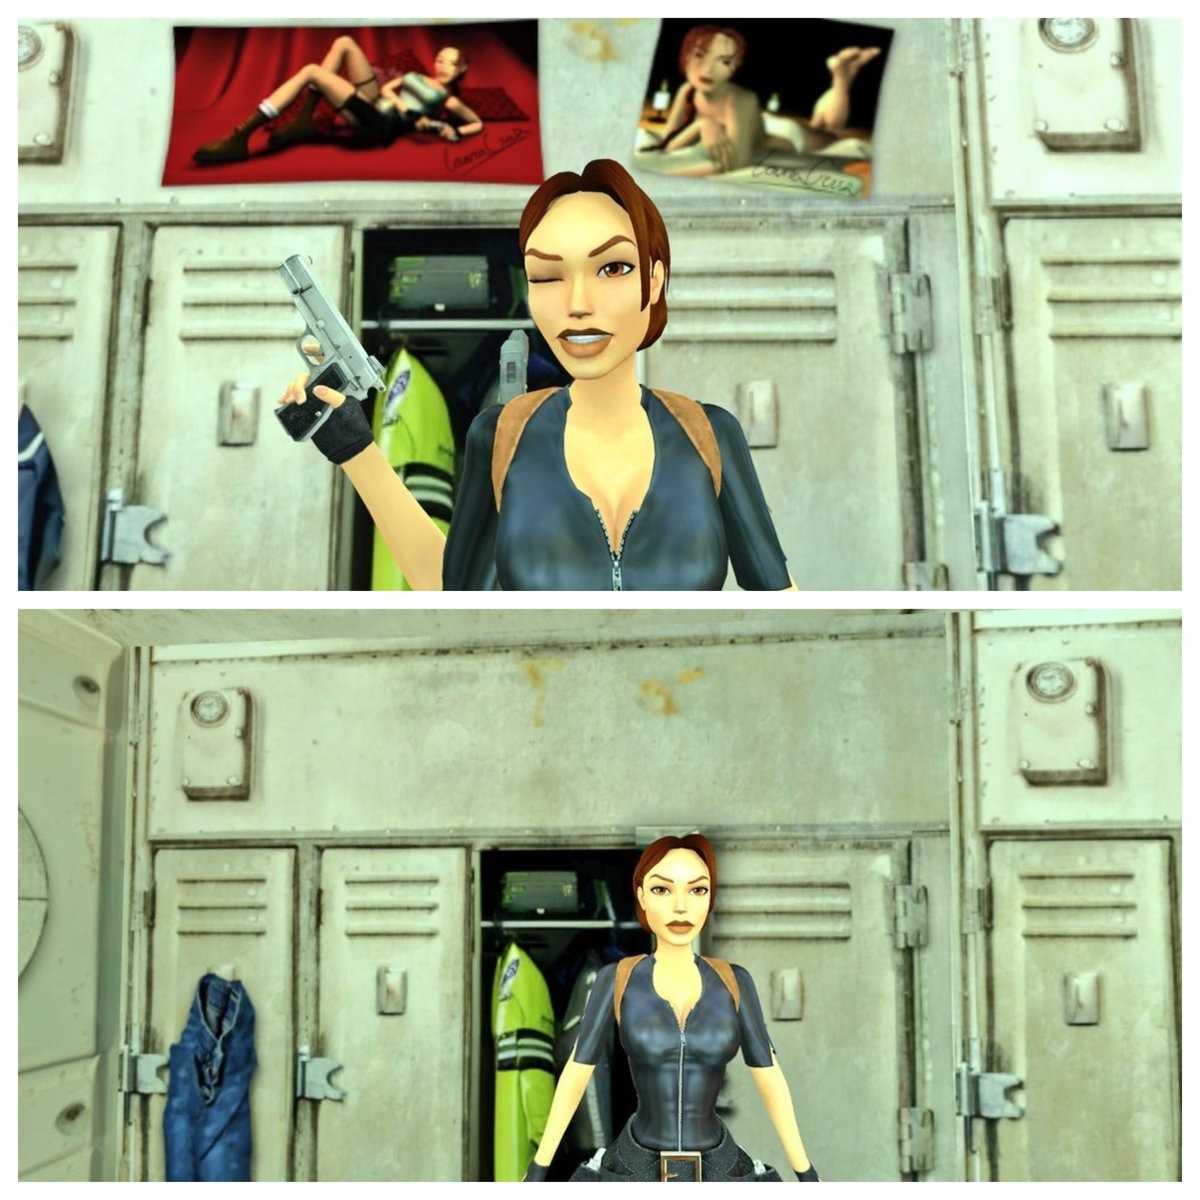 Tomb Raider 1-3 Remastered posters pin-up comparatif avant et après patch